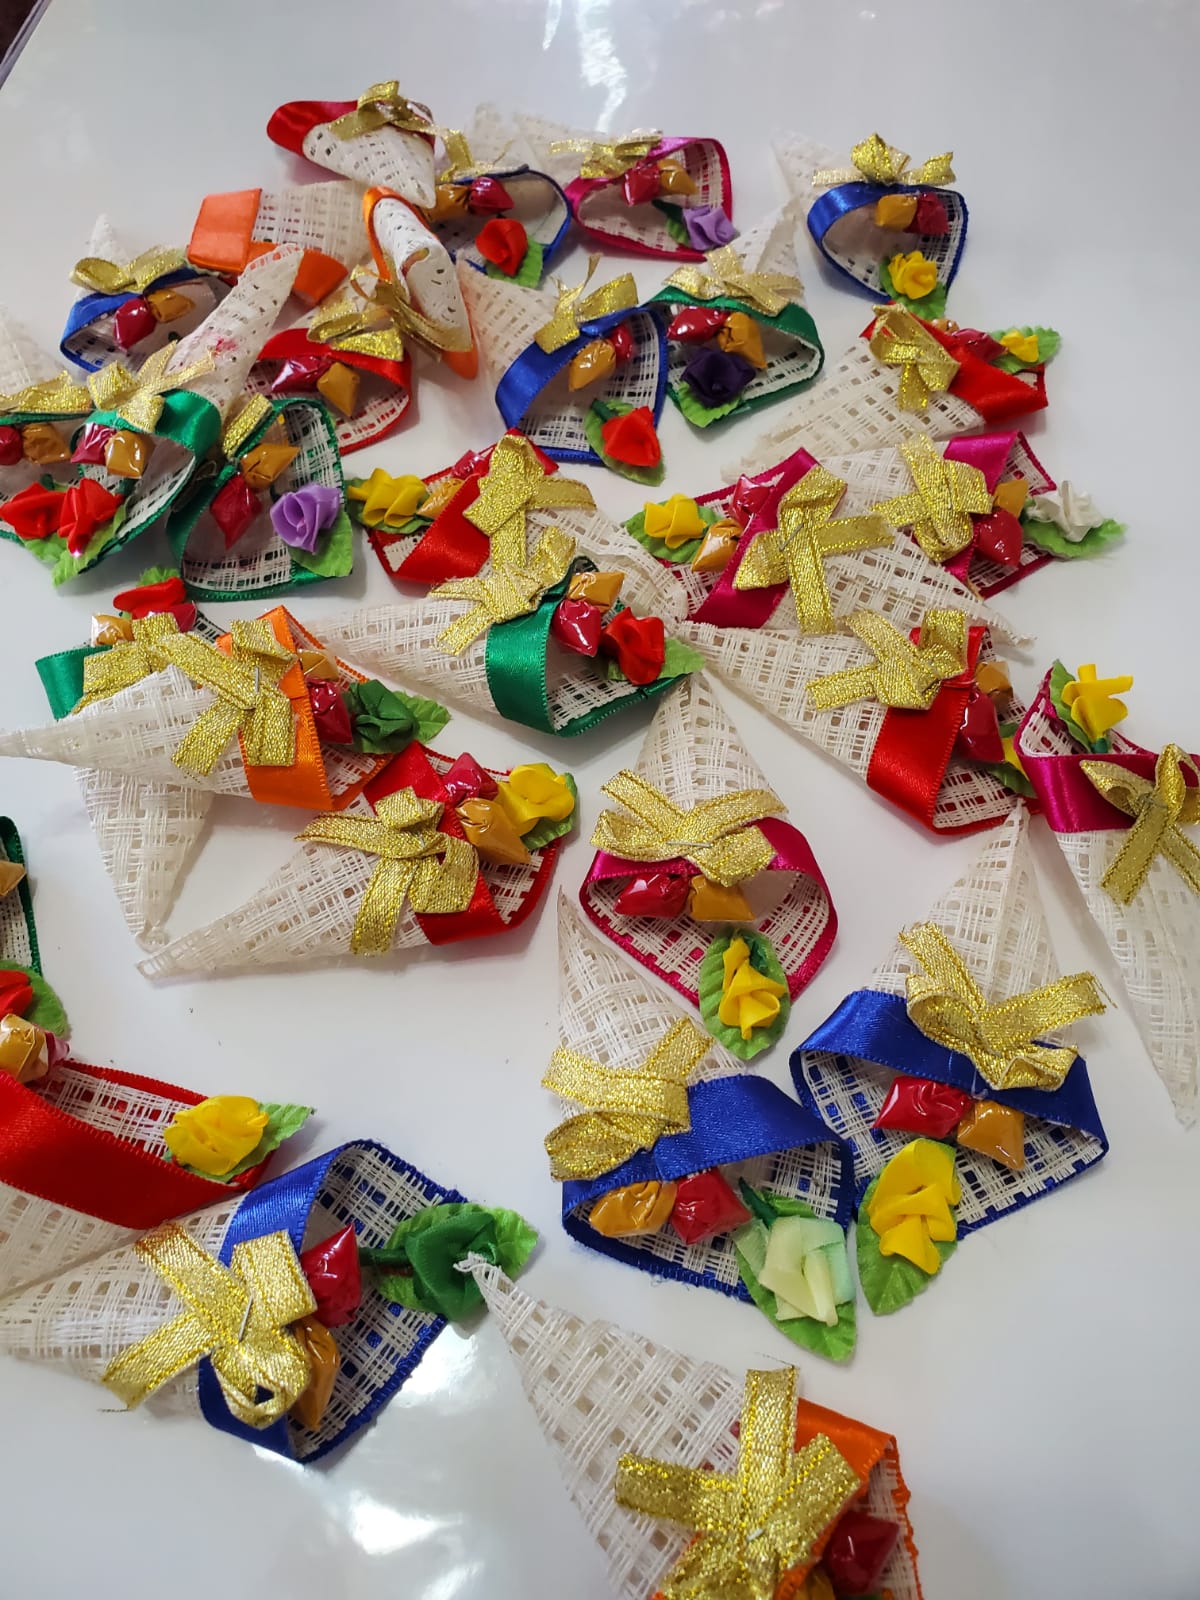 Urvi Terracotta - VaraLakshmi Vratam Return gifts order by dear friend  Swapna... Tasseled jute pouch with a pair of lotus earrings and handpainted  Haldi kumkum boxes. #UrviTerracotta #ReturnGifts #VaraLakshmiVratamGifts  #HaldiKumkumBoxes ...